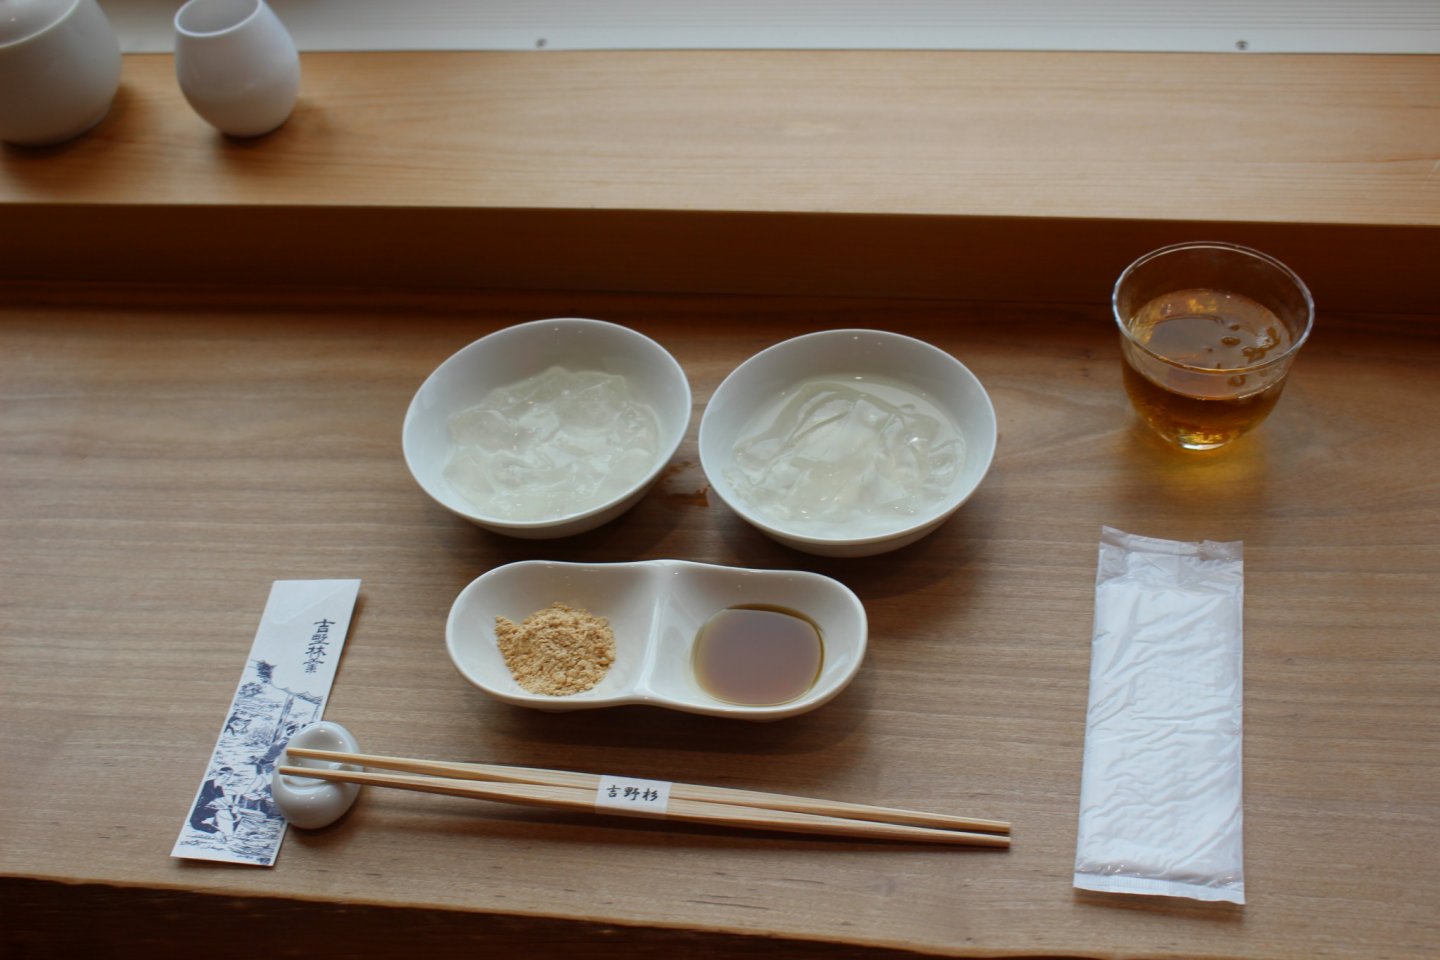 Kudzu mochi and kudzu kiri and tea dessert set, a refreshing afternoon snack